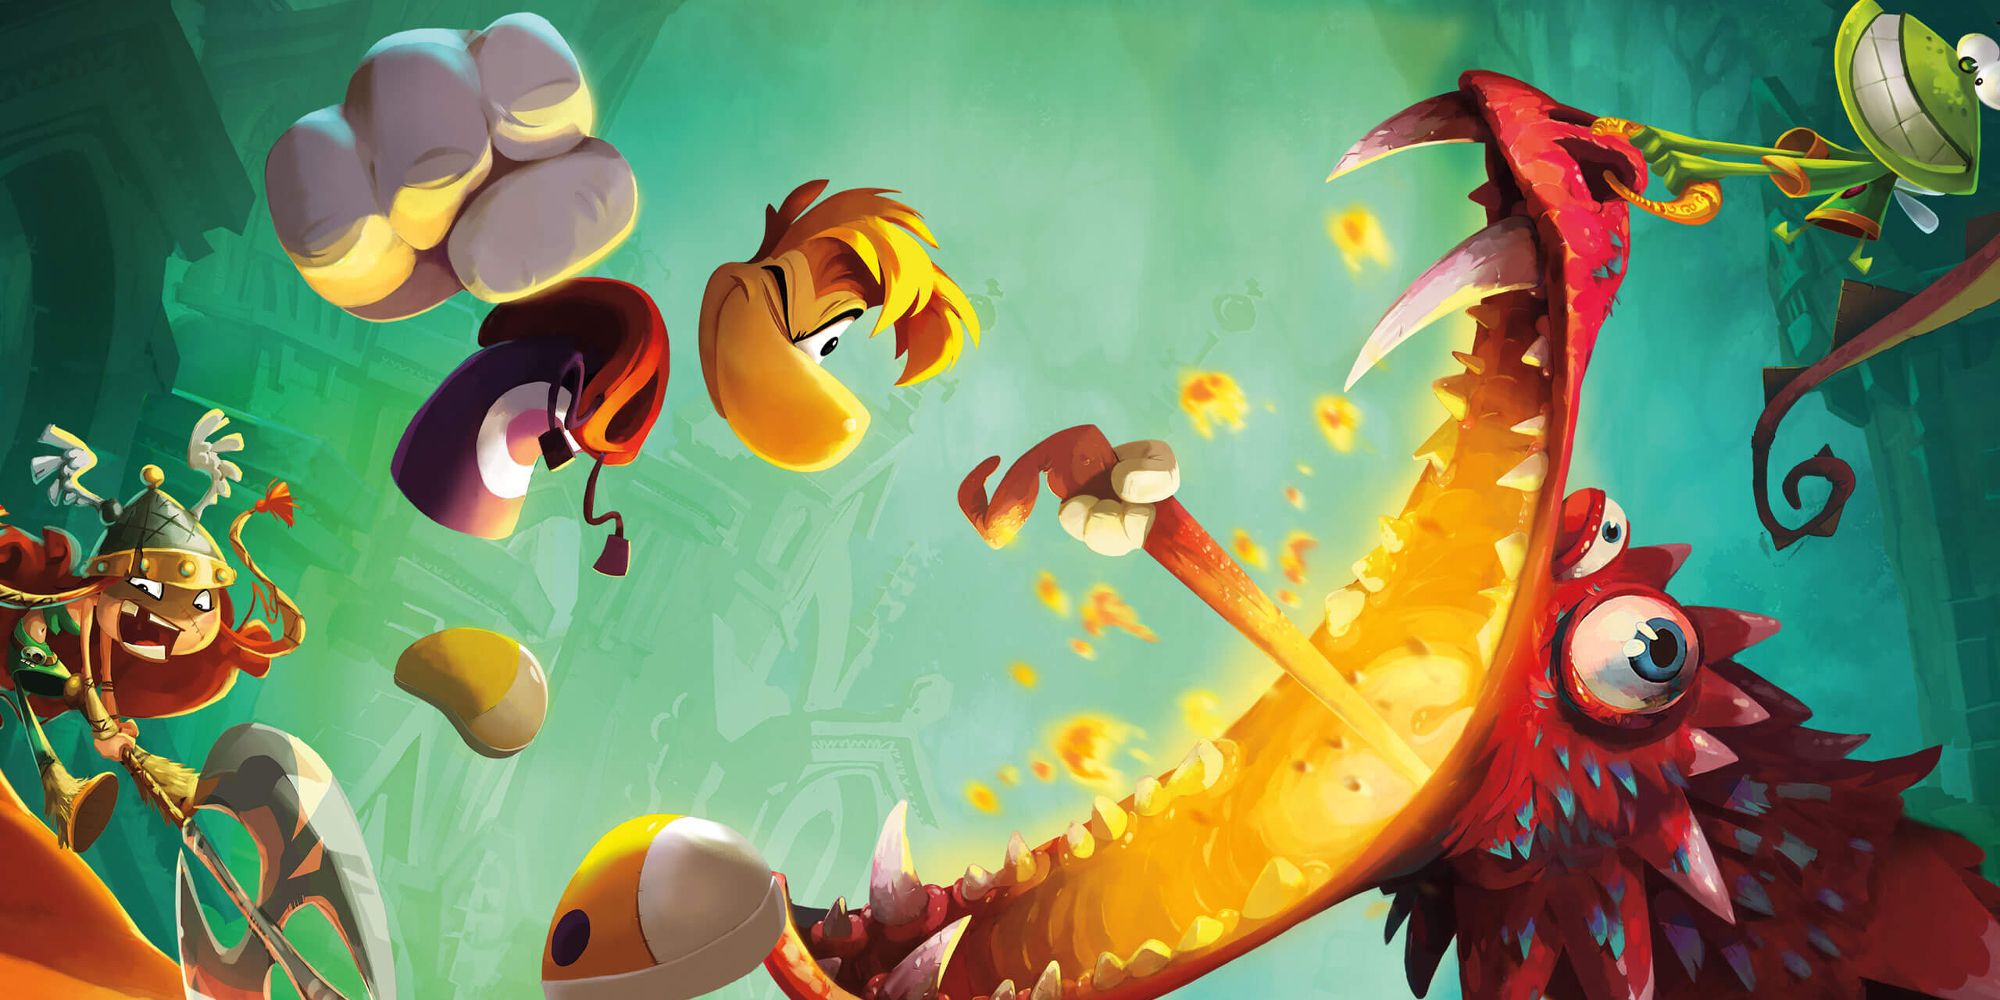 Rayman fighting a dragon in key artwork for Raymen Legends (2013)